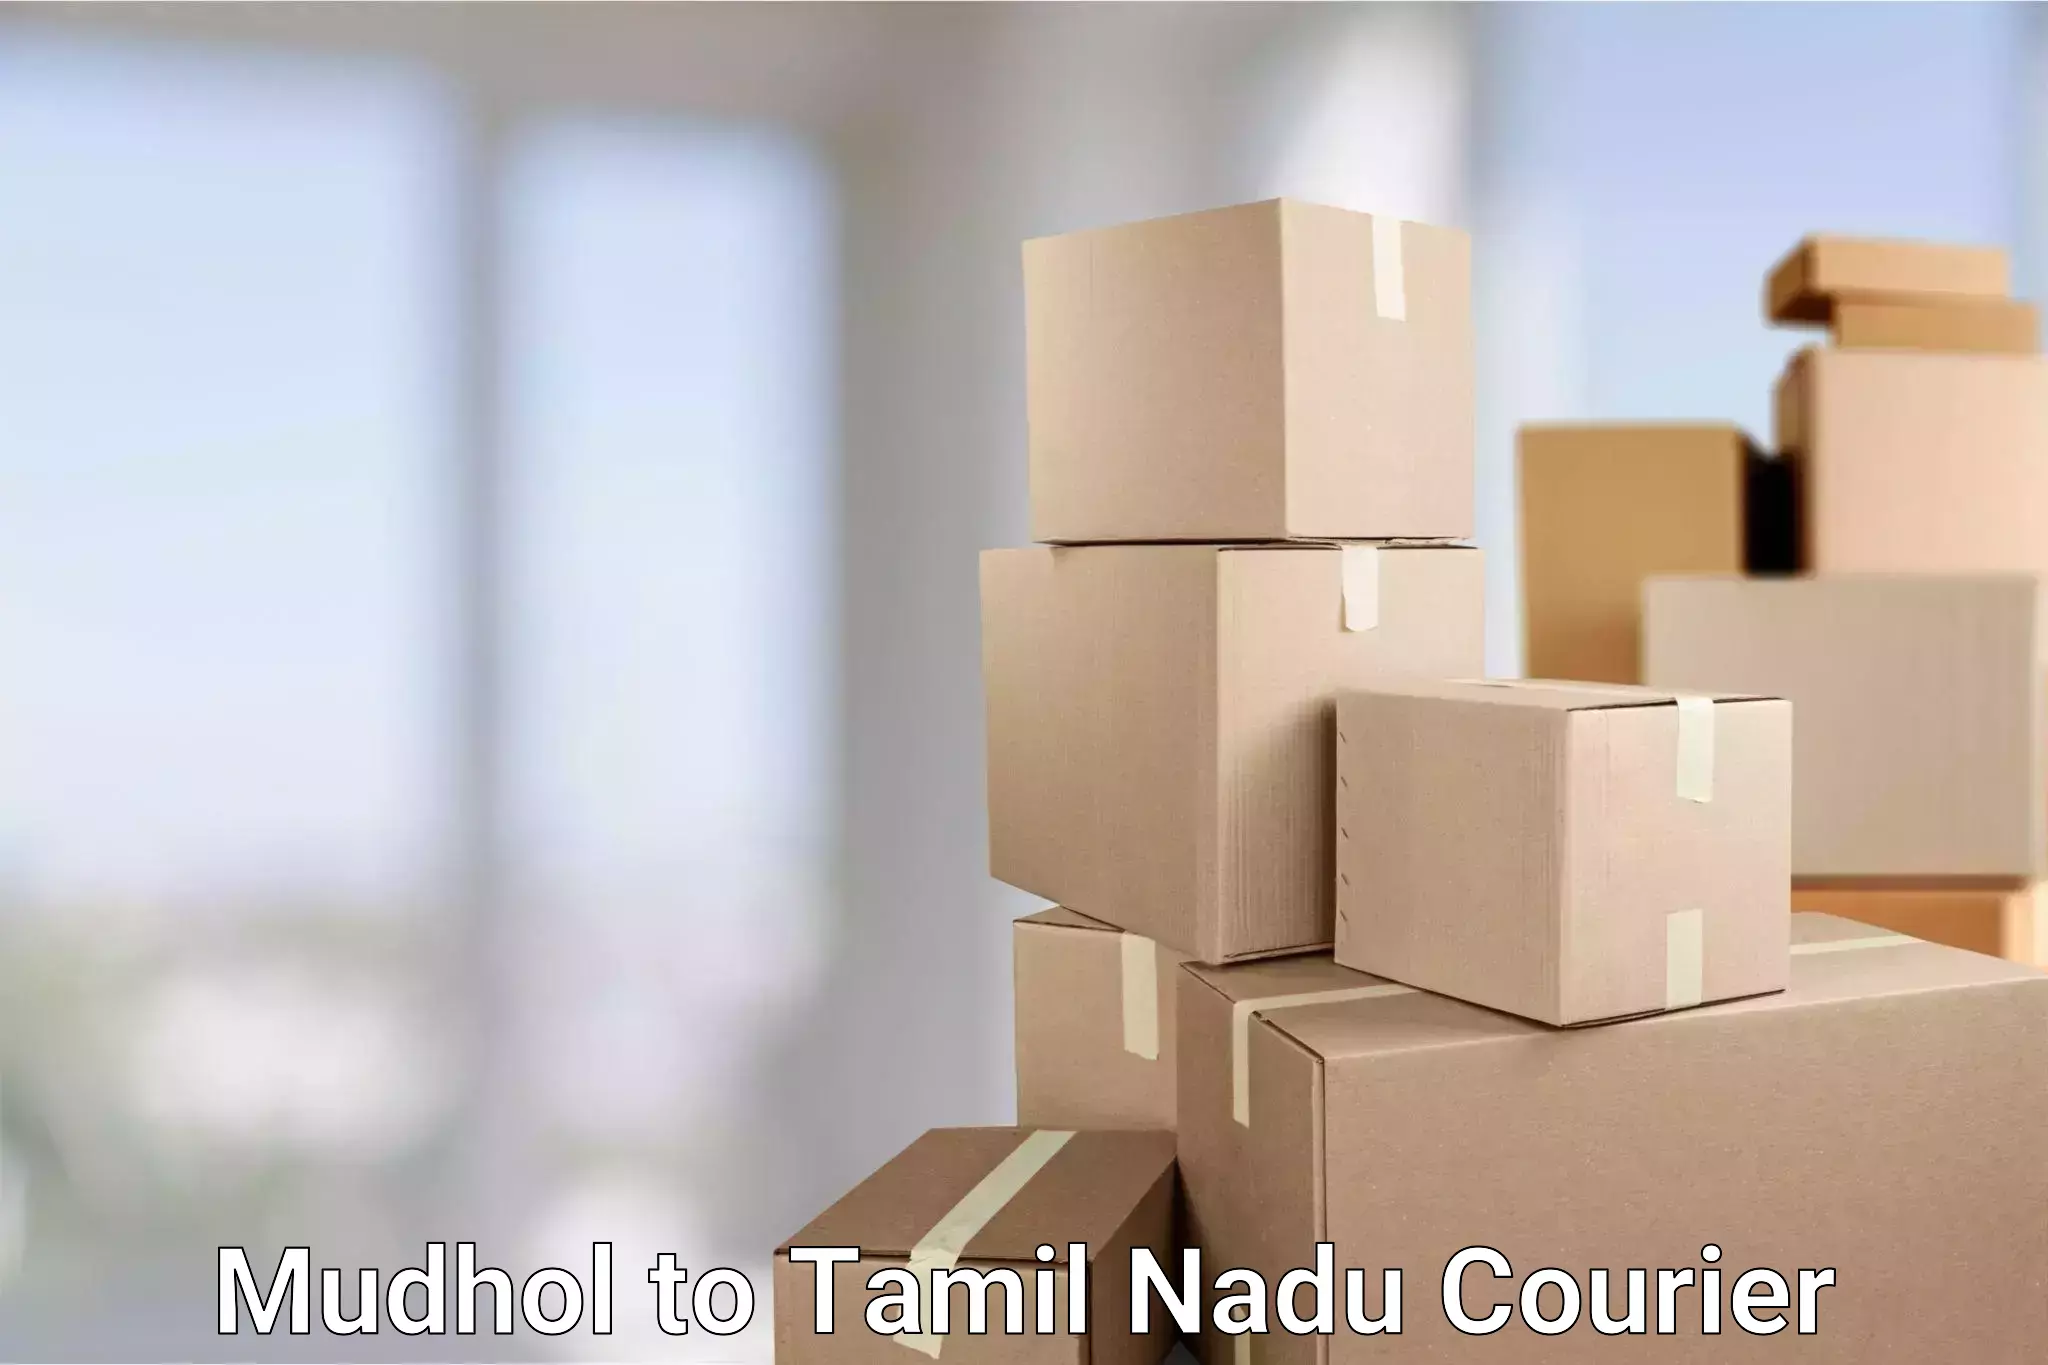 User-friendly courier app Mudhol to Tirunelveli